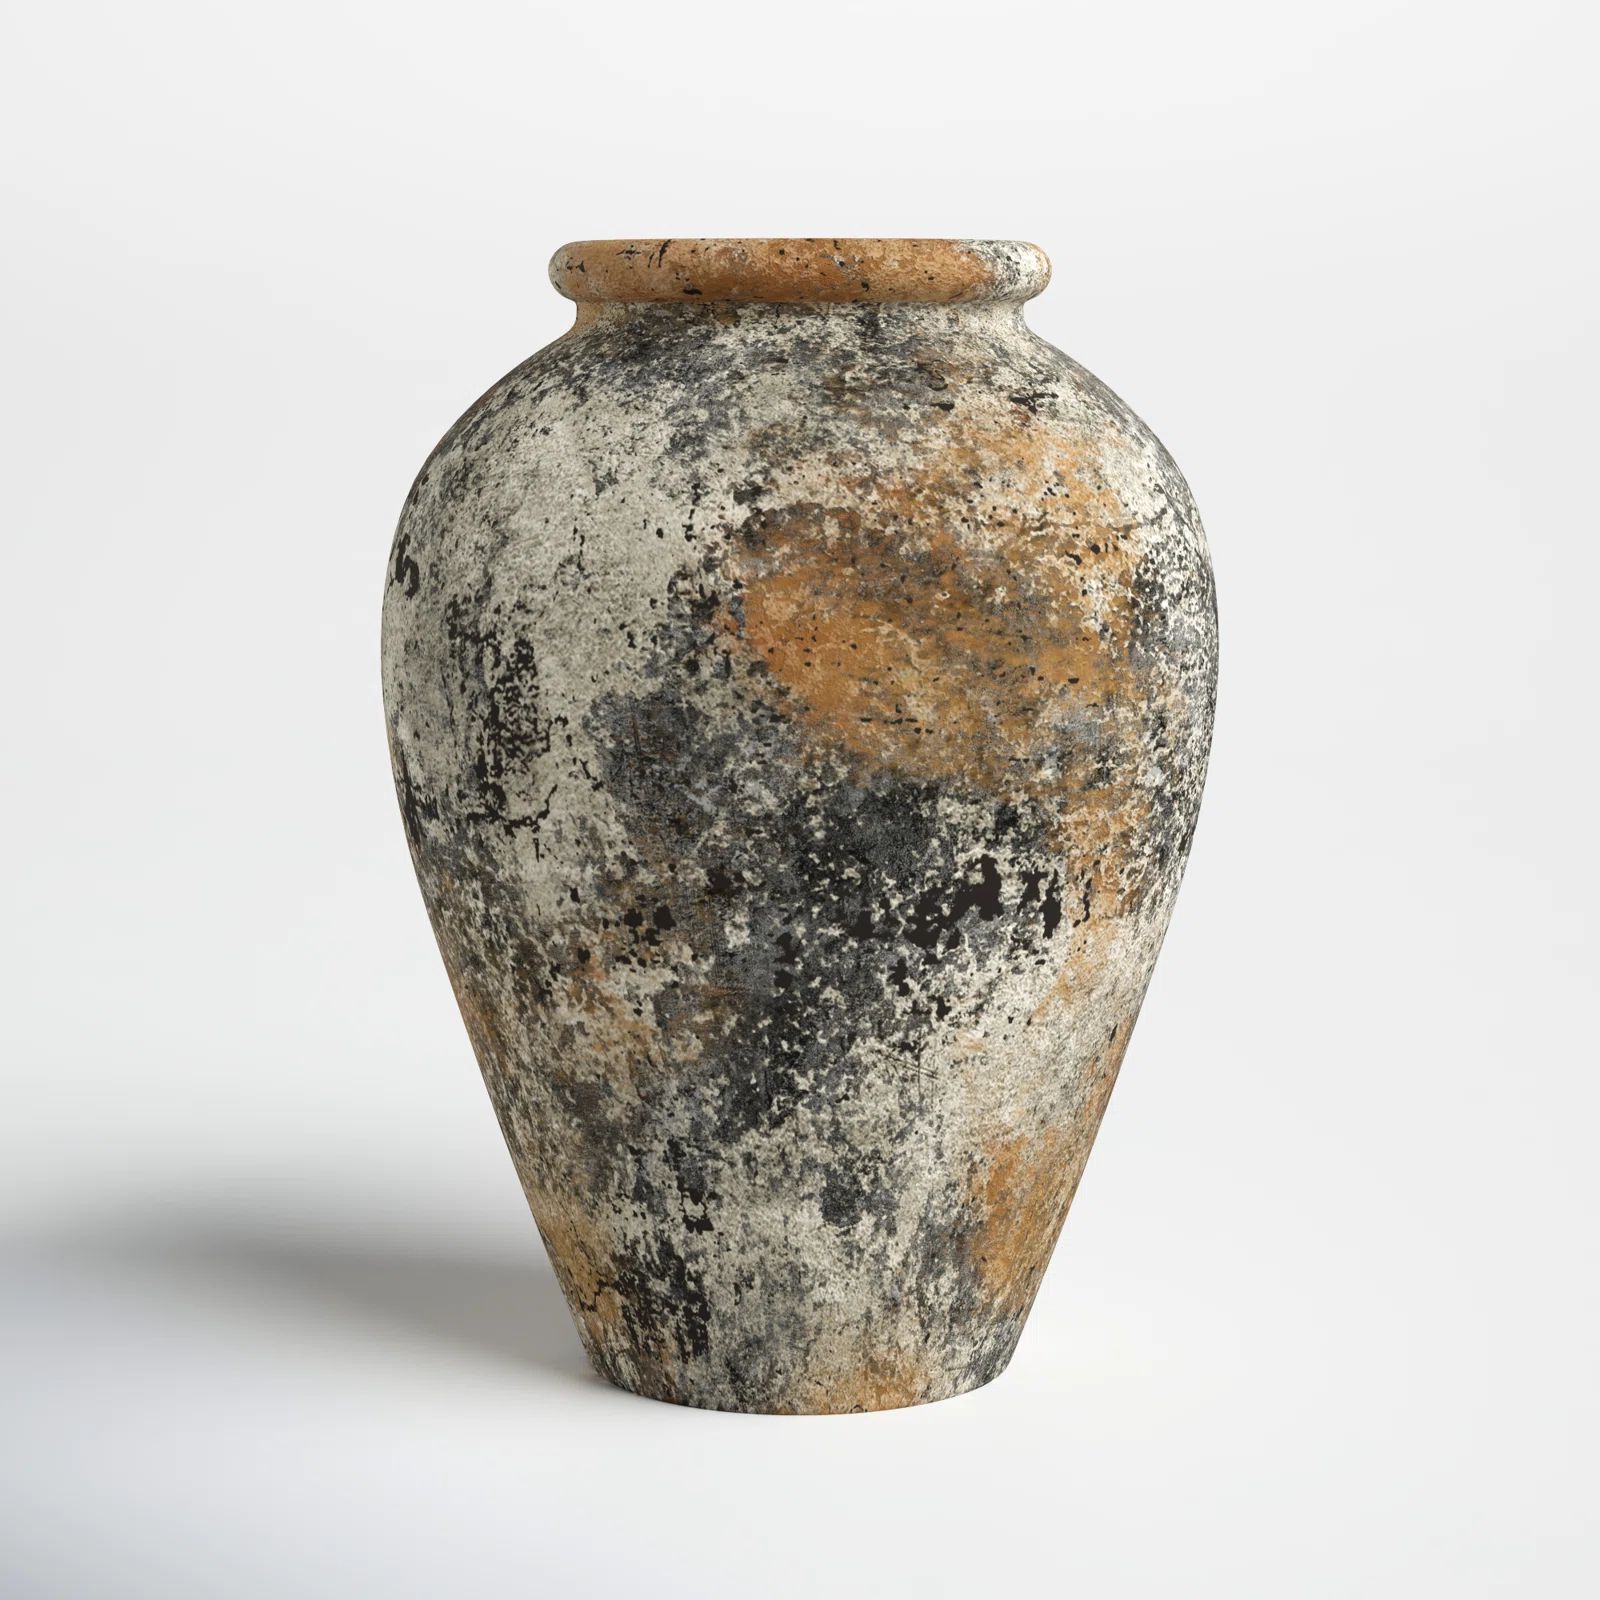 Zera Terracotta Table Vase | Wayfair North America